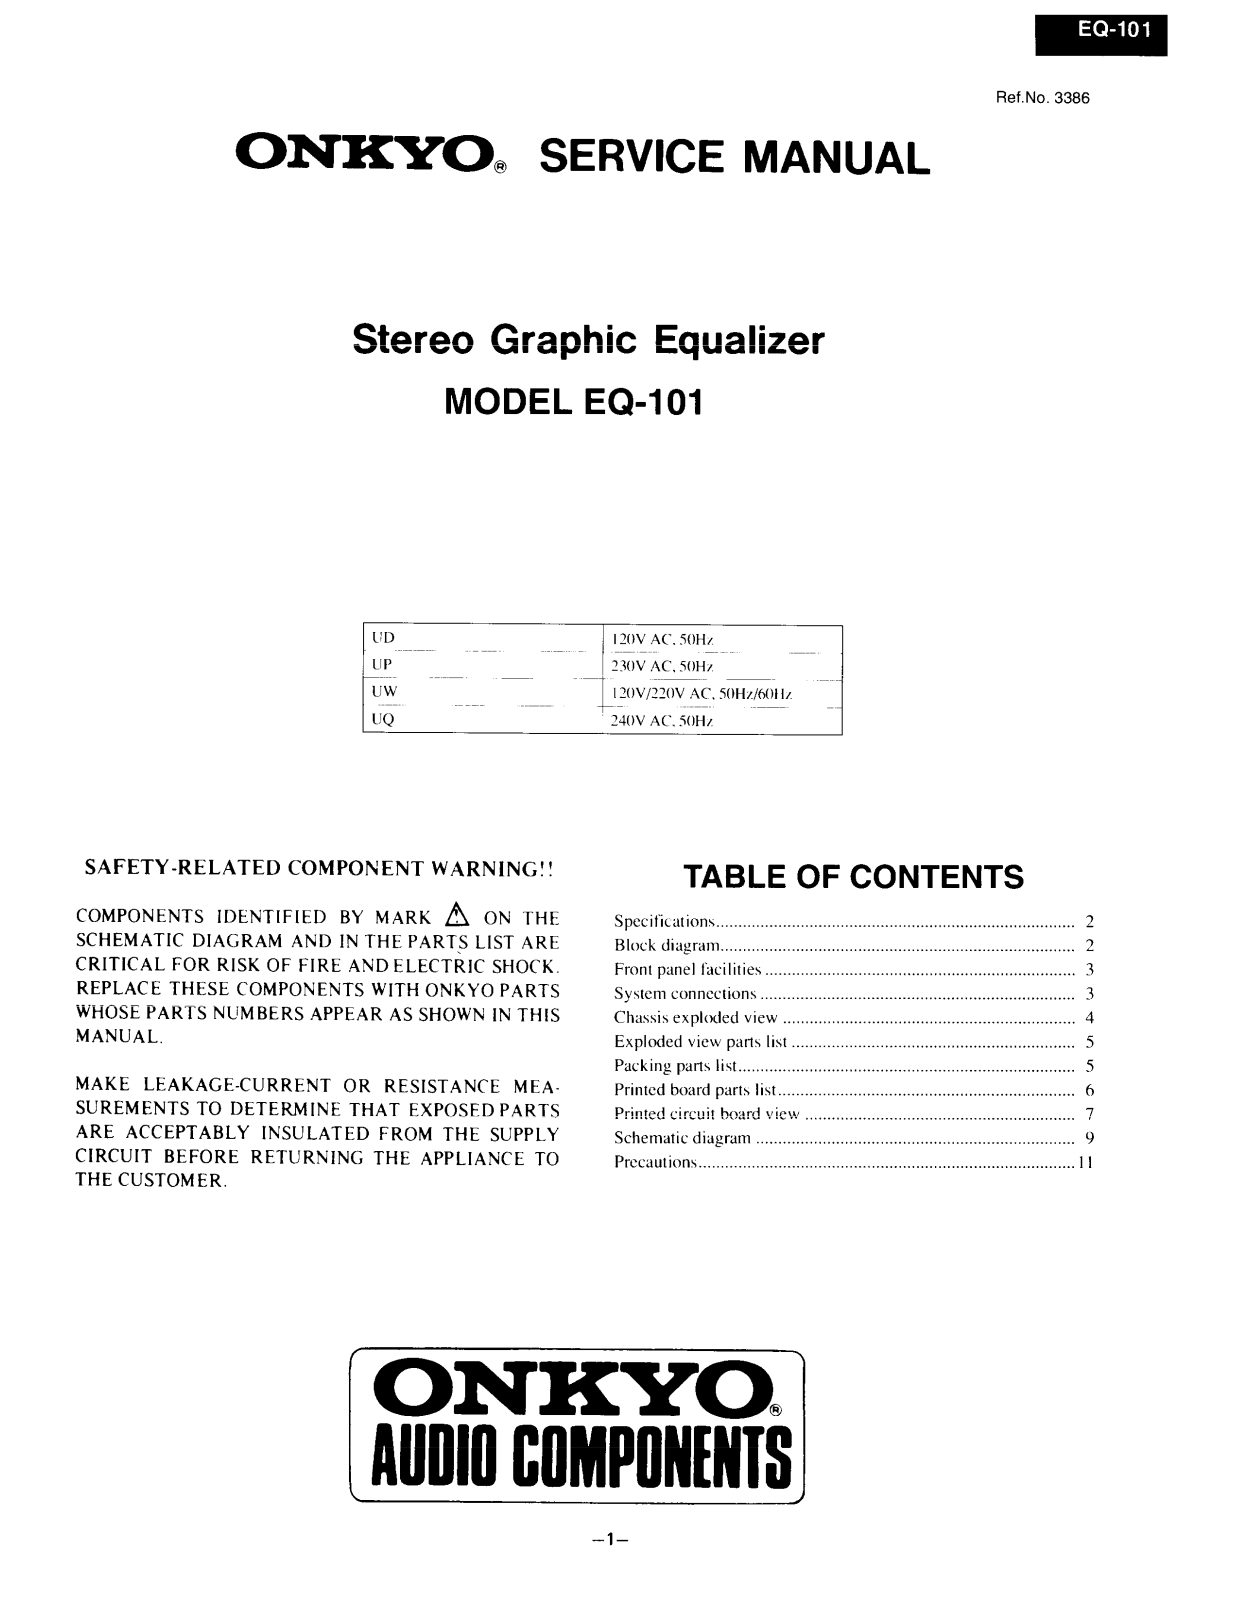 Onkyo EQ-101 Service manual